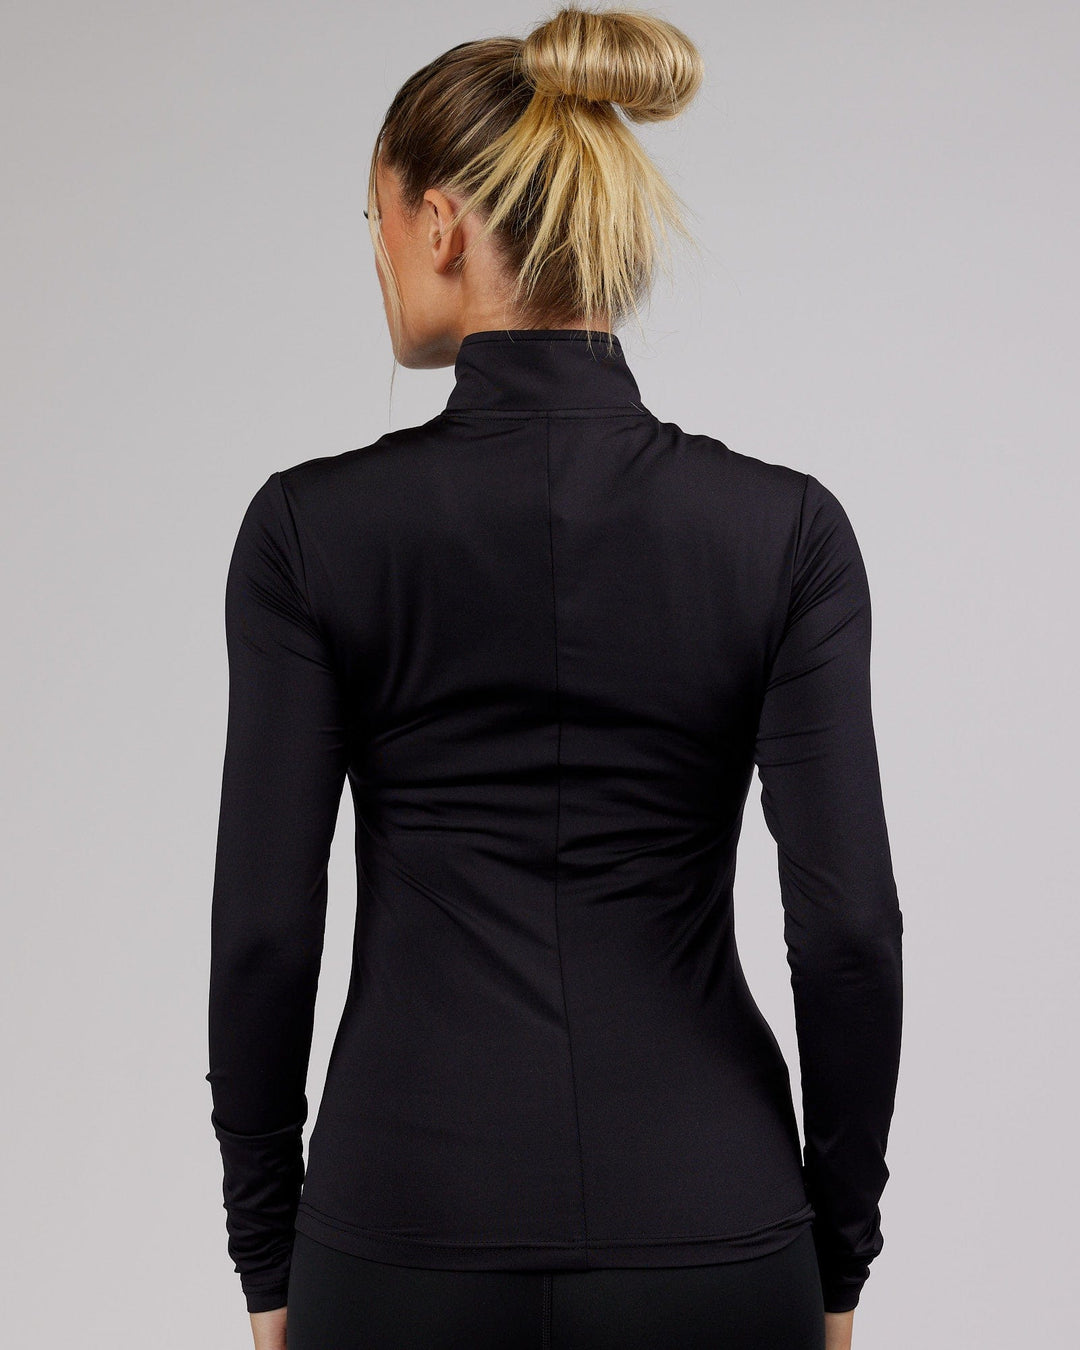 Woman wearing Streamlined 1/4 Active Long Sleeve Top - Black